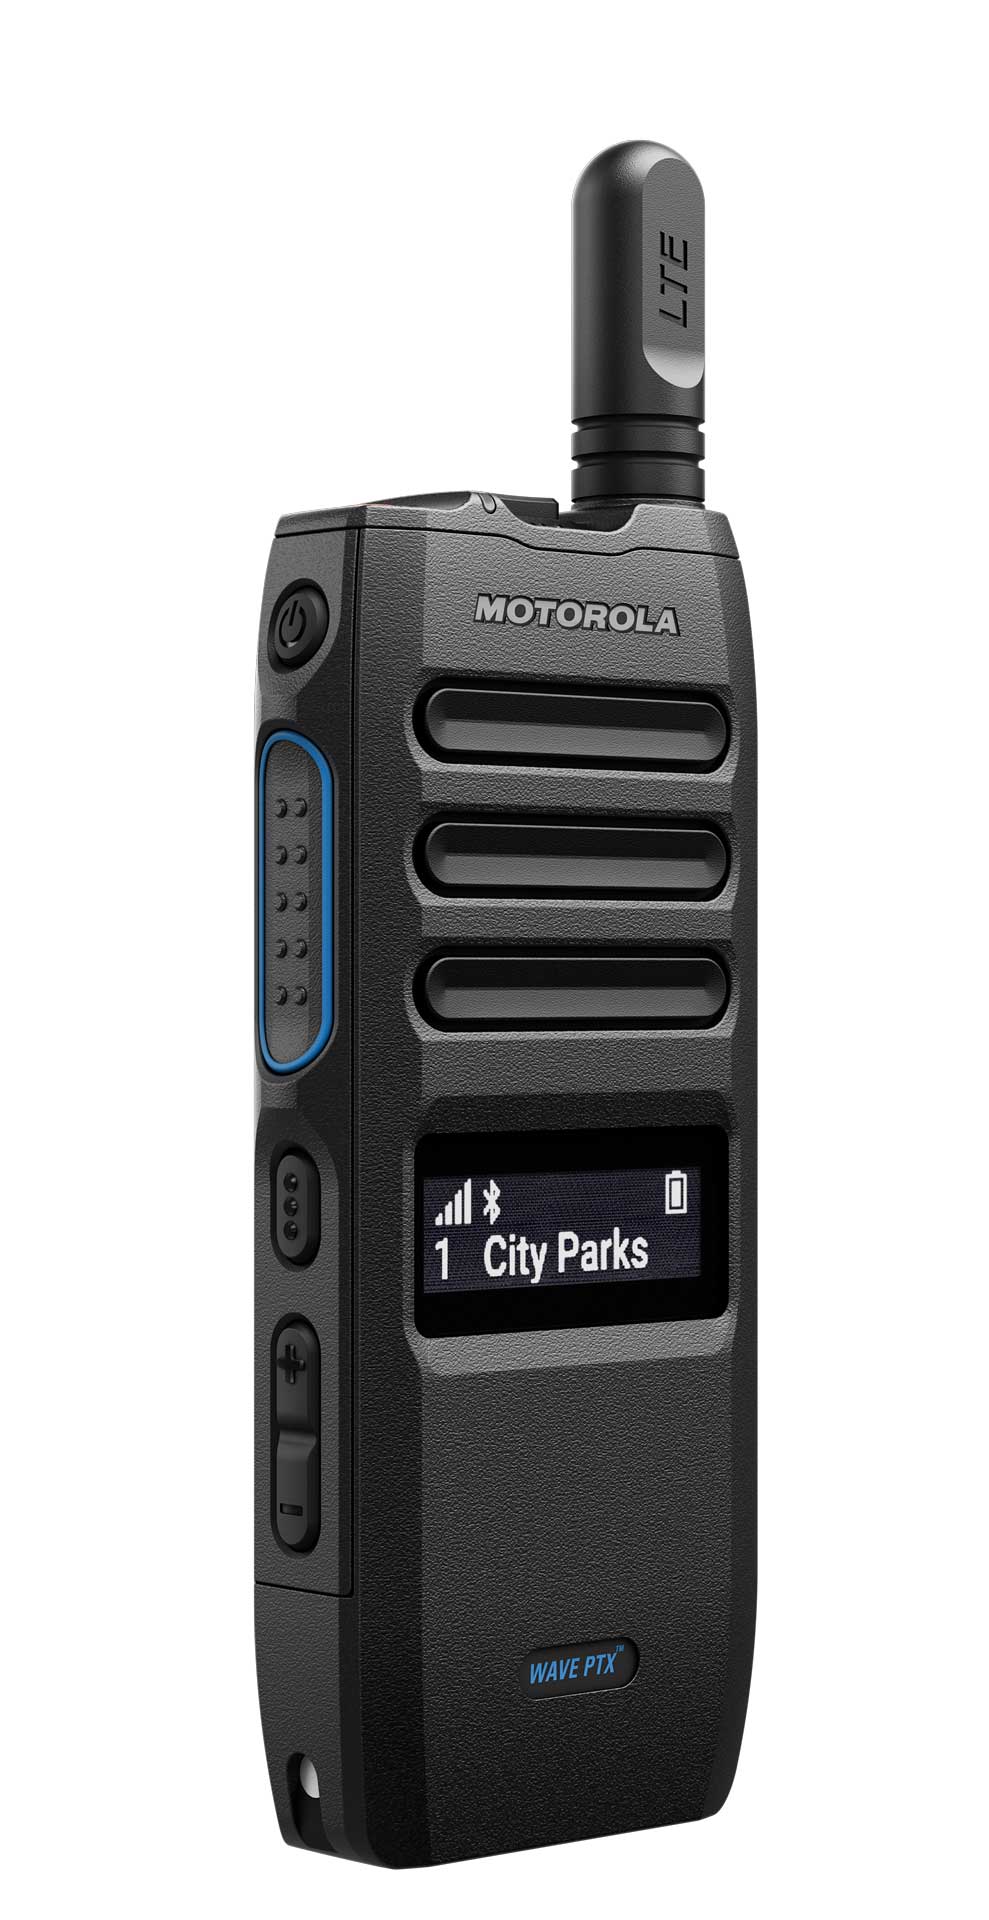 Motorola WAVE PTX radio TLK110 Battery Antenne HK2189A no SIM